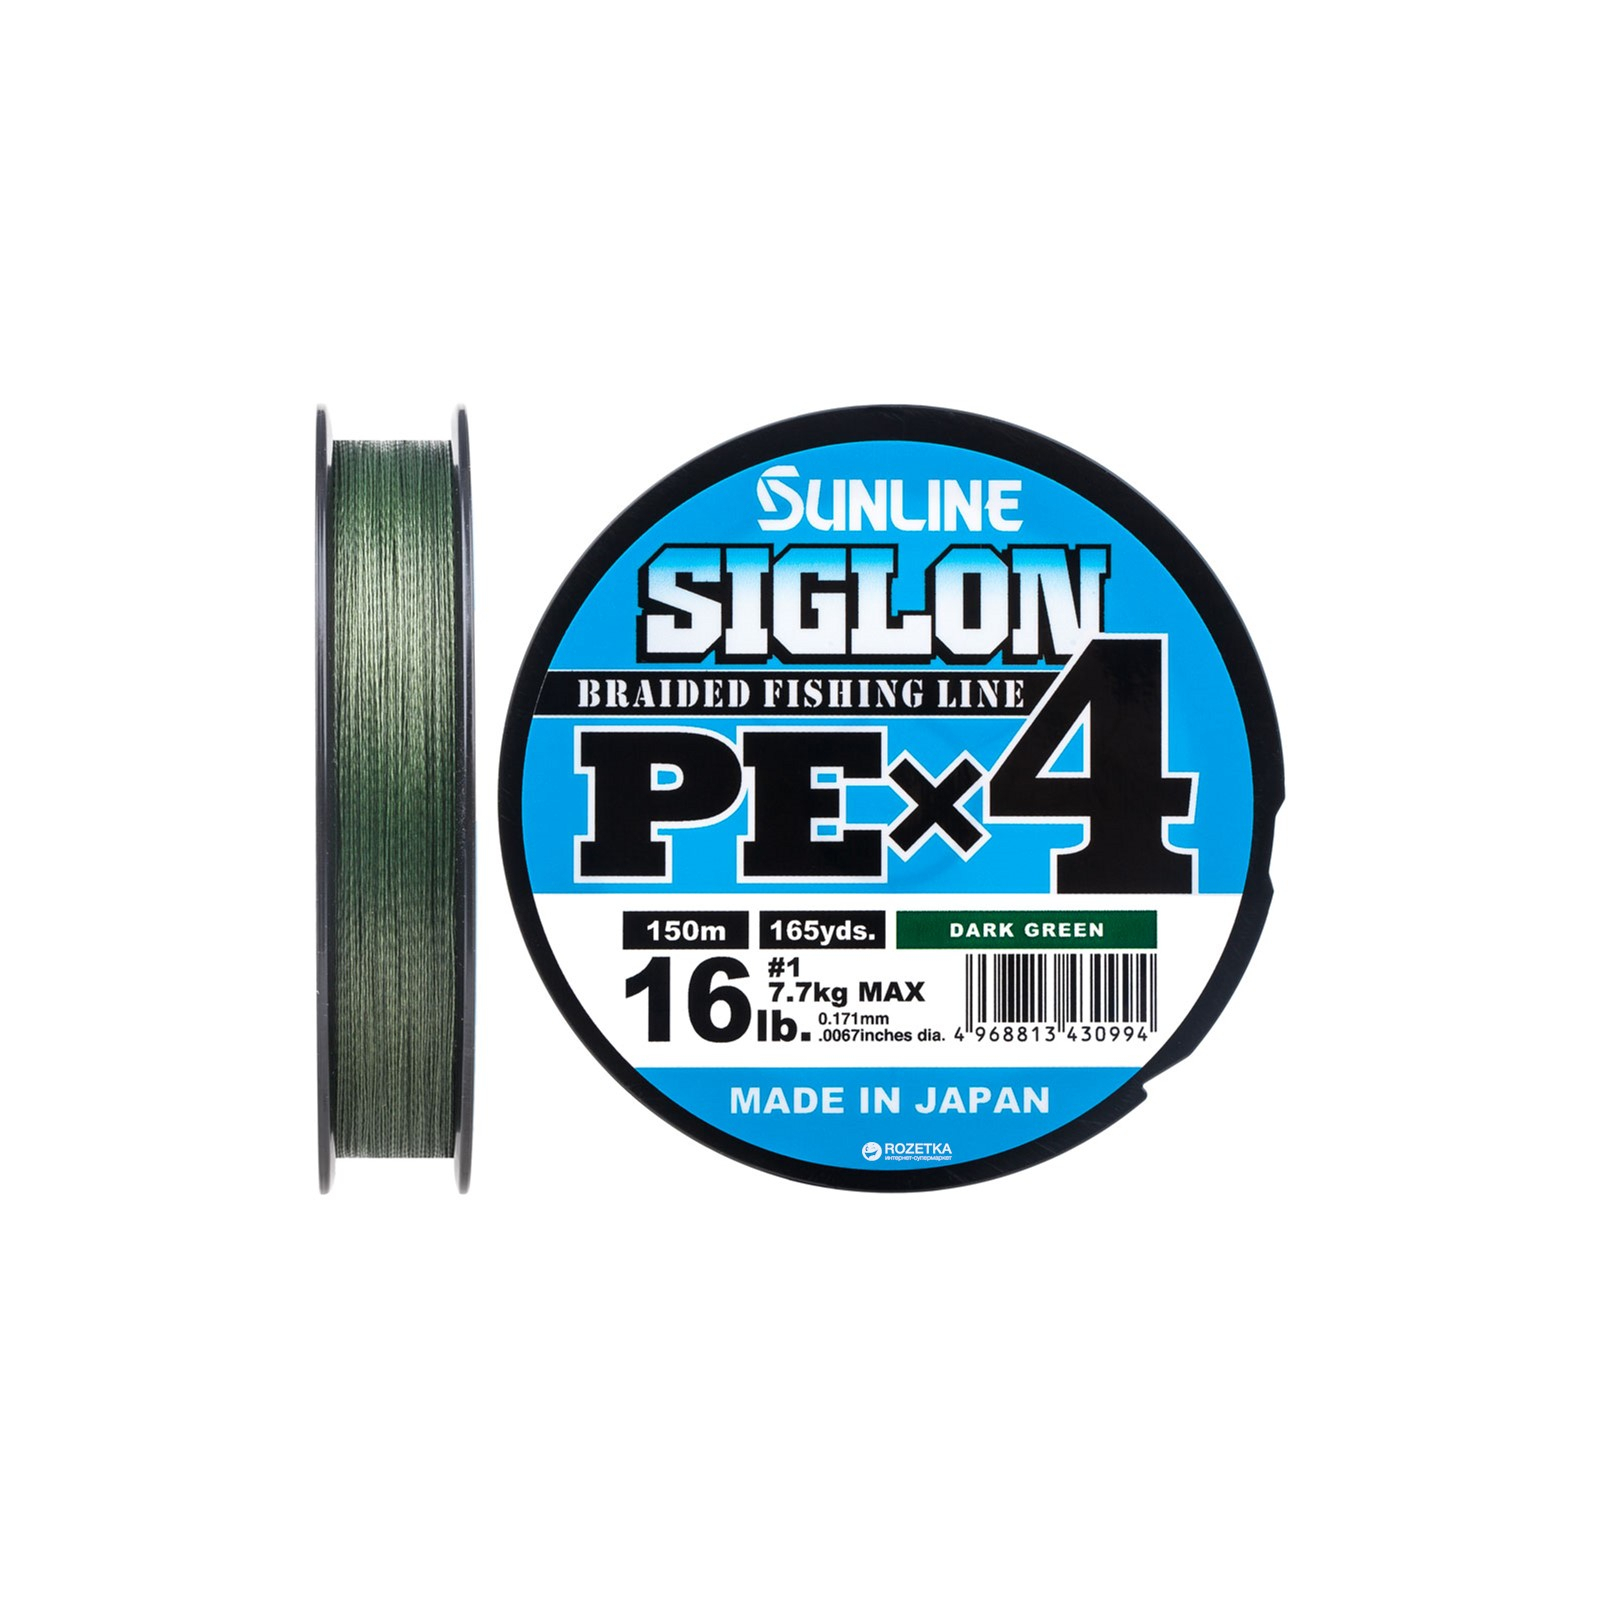 Шнур Sunline Siglon PE н4 150m 1.0/0.171mm 16lb/7.7kg Dark Green (1658.09.19)